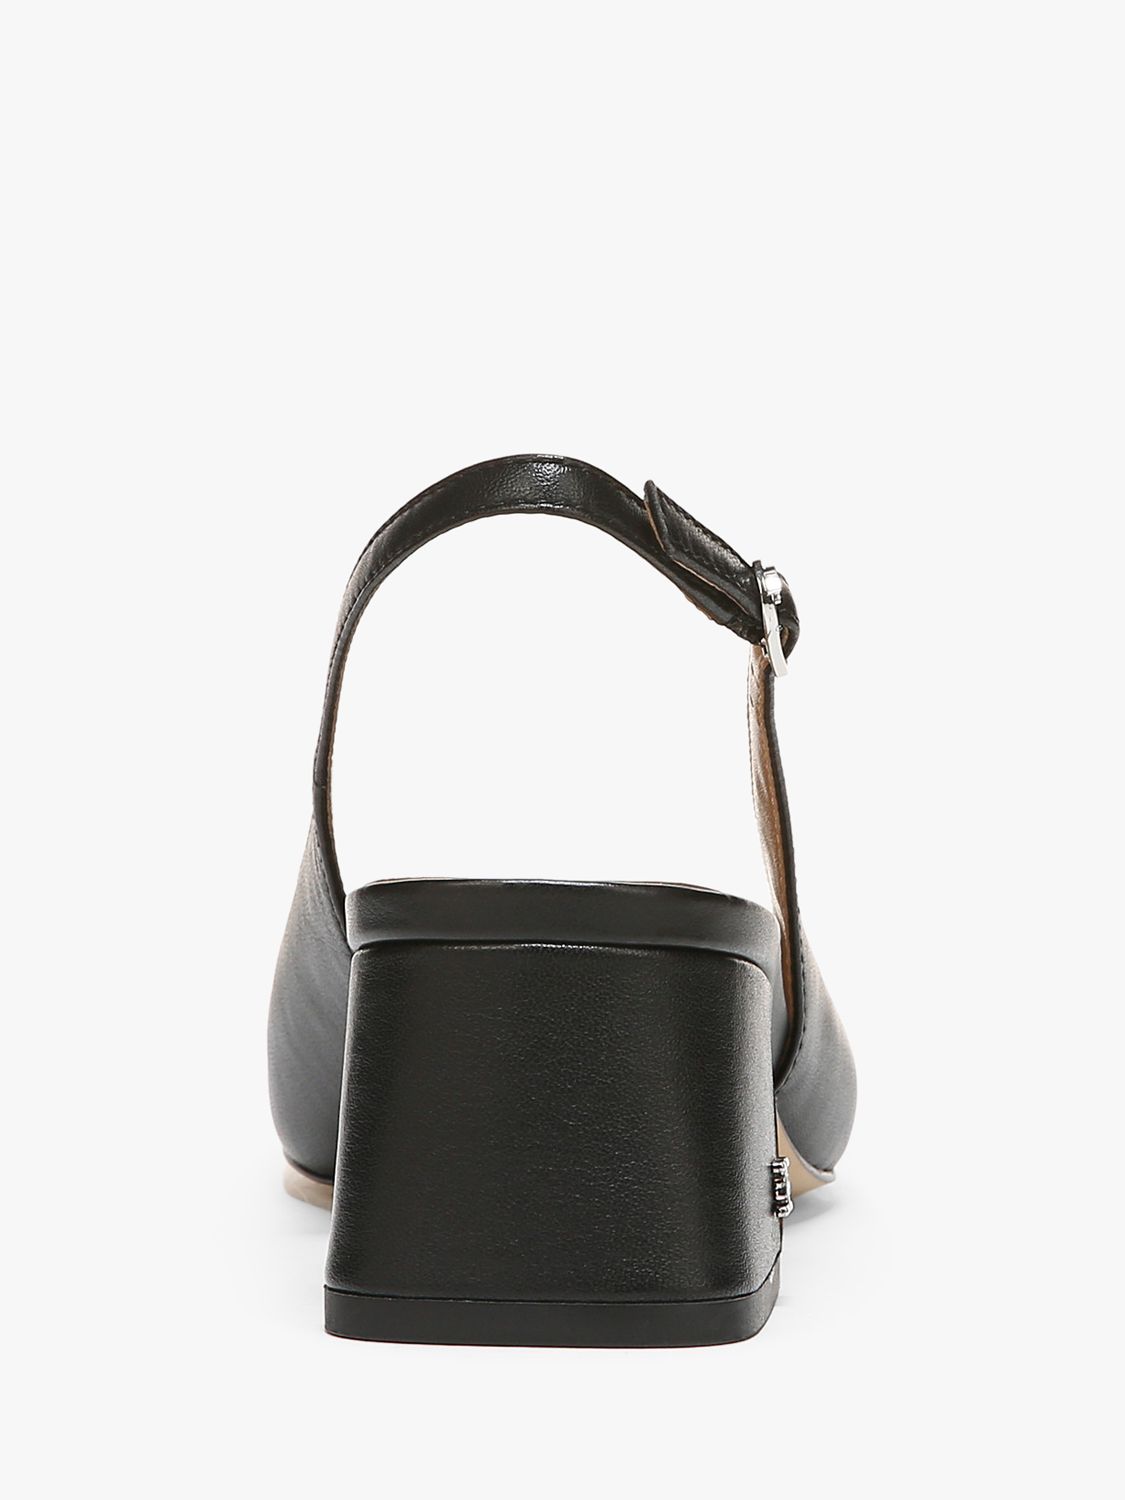 Sam Edelman Terra Leather Slingback Shoes, Black, 8